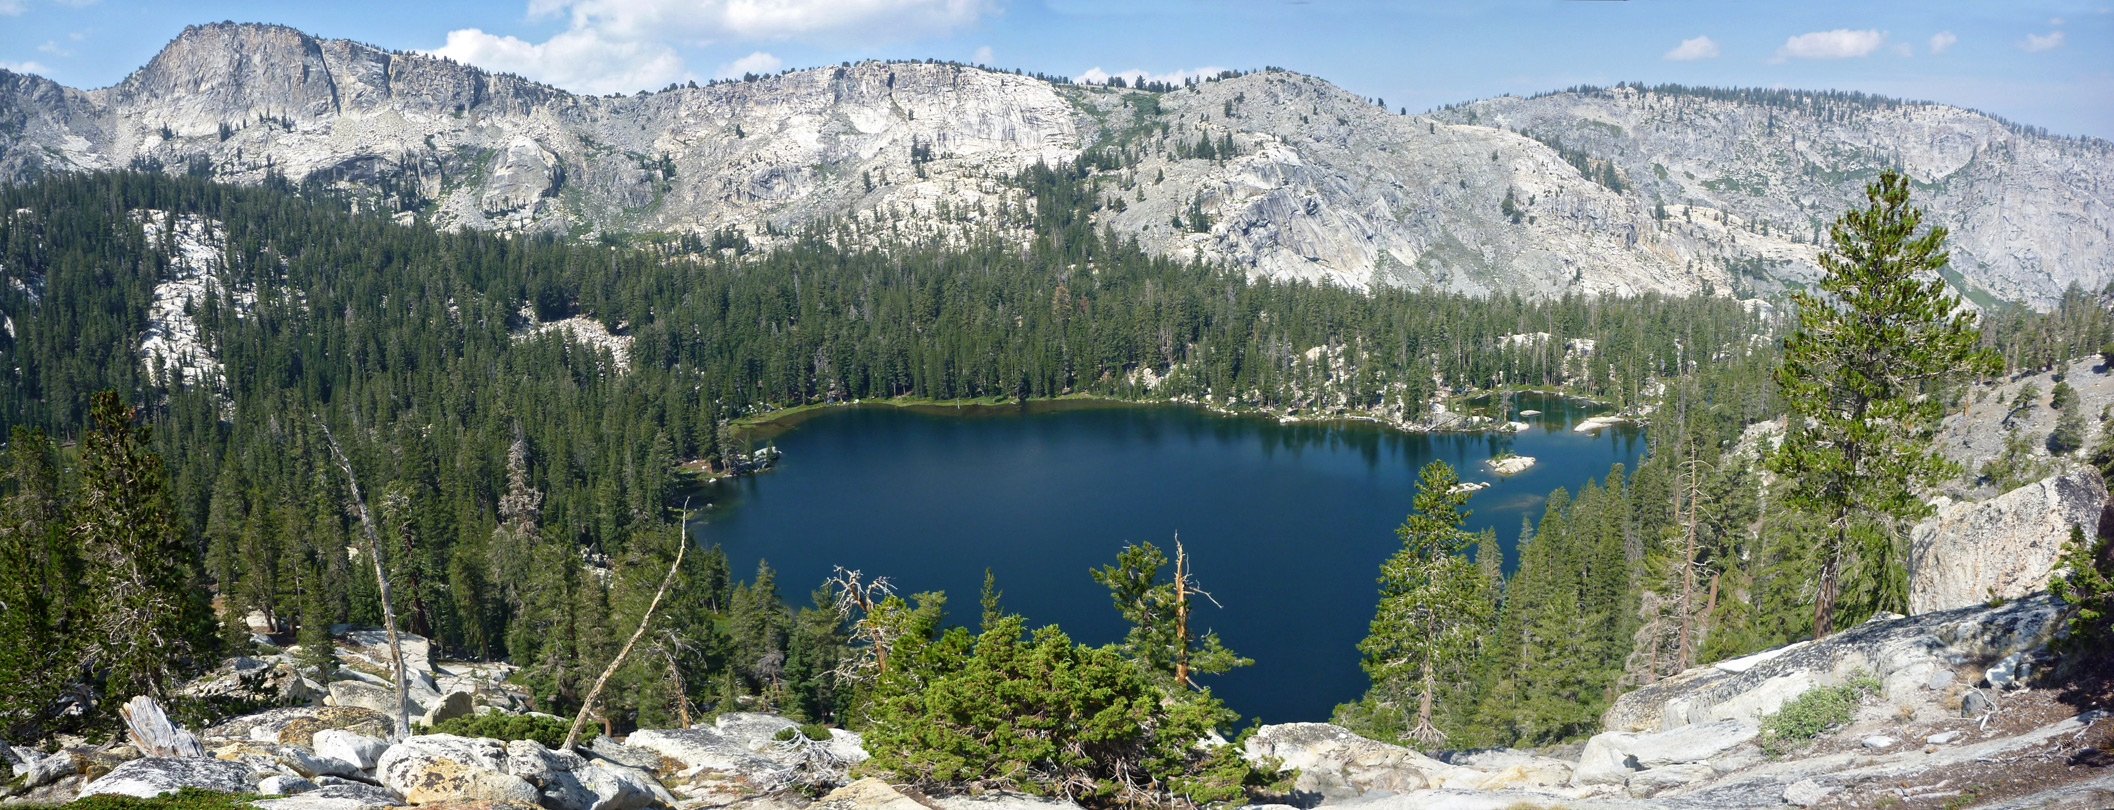 Yosemite lakes basin